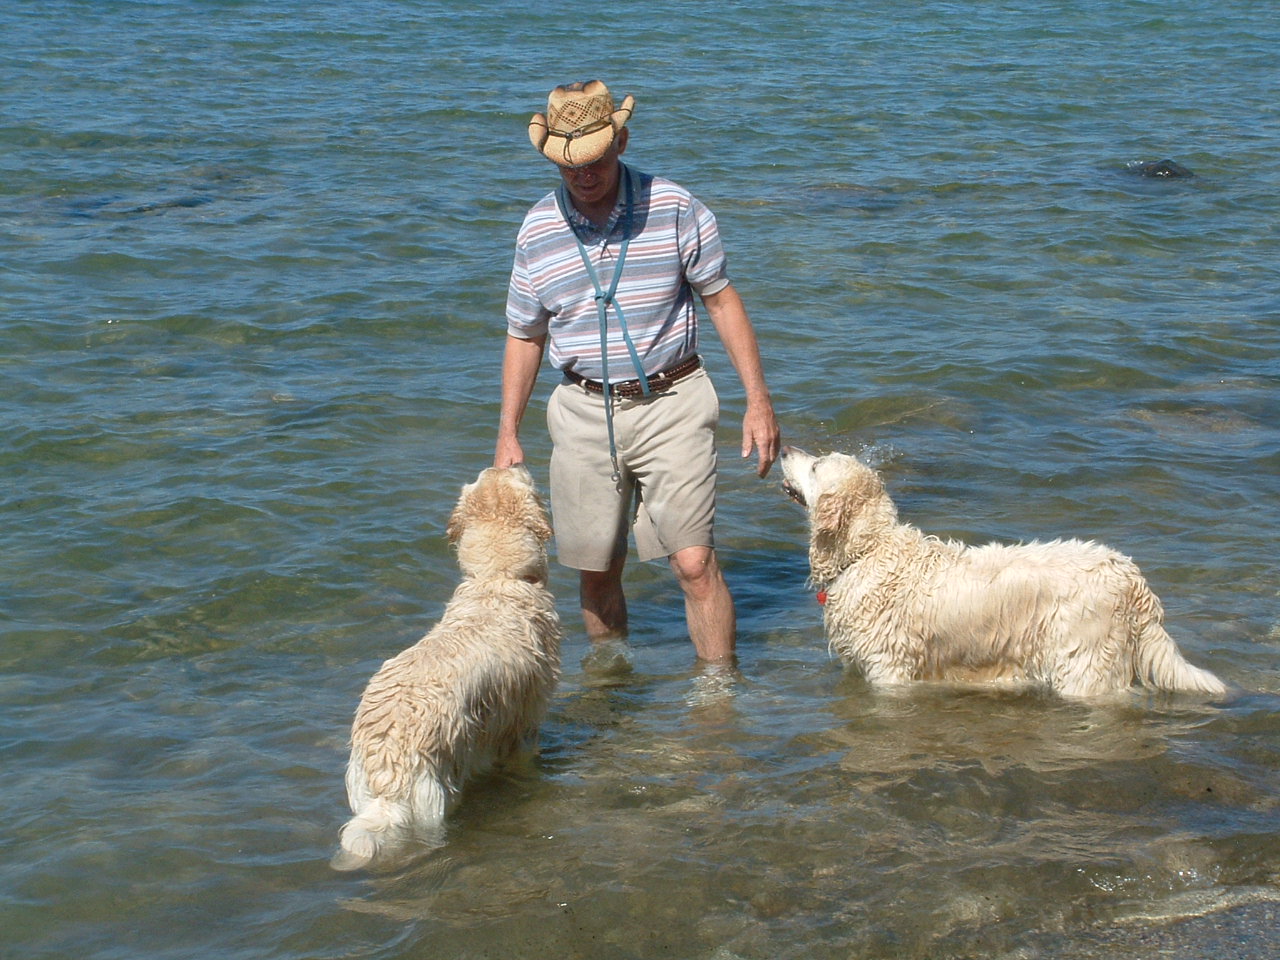 [Dan+and+dogs++in+water.jpg]